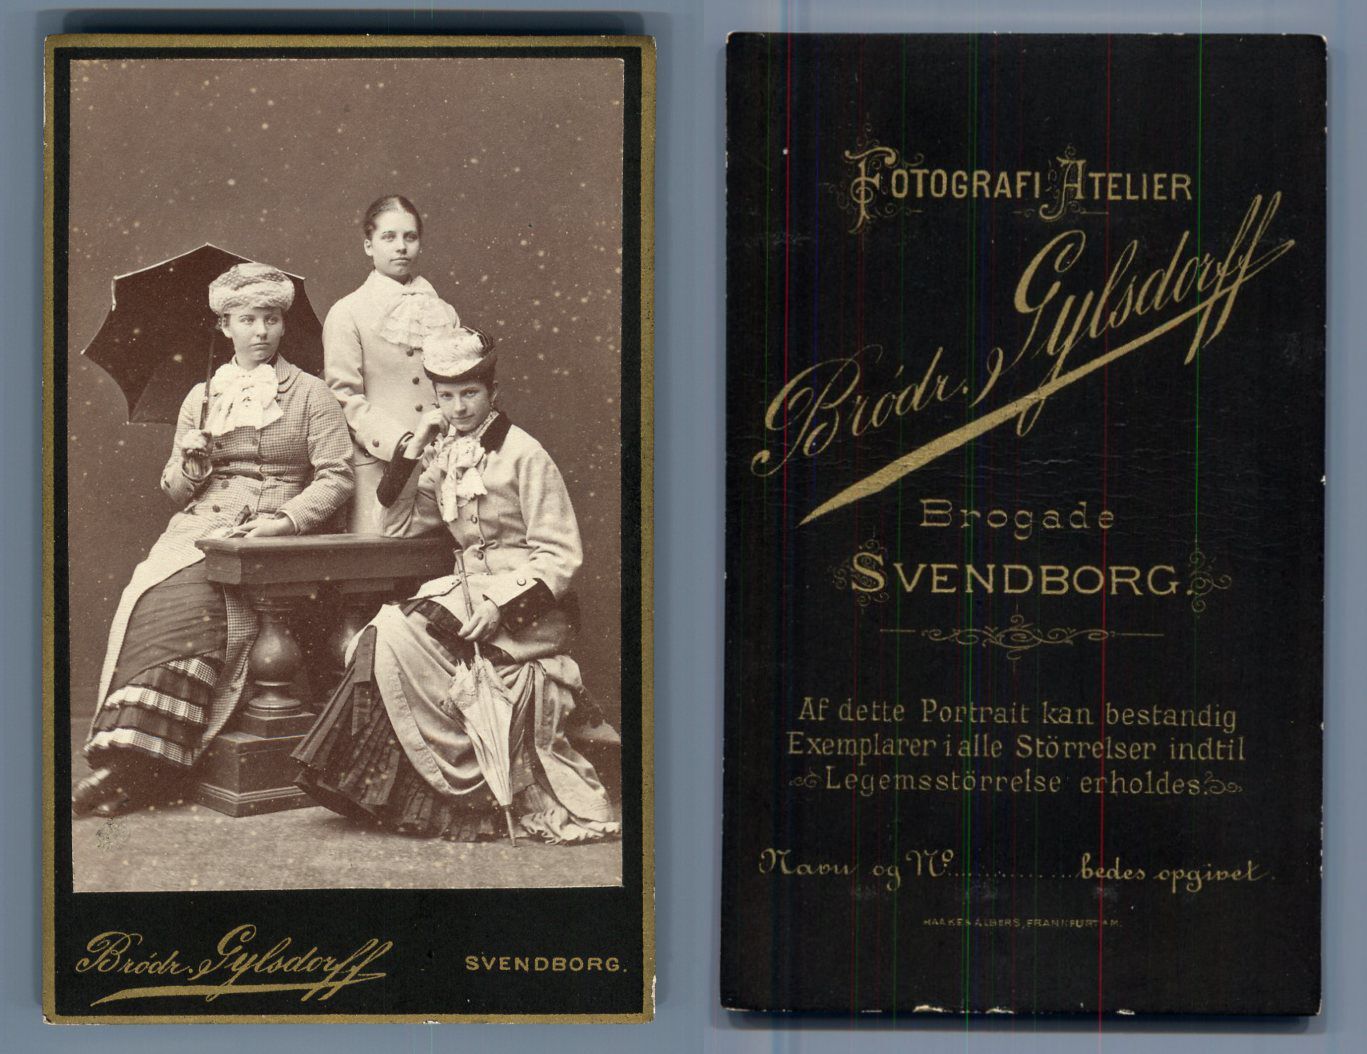 Gylsdorff, Svendborg CDV, Vintage Albumen Business Card, Albuminated Print 